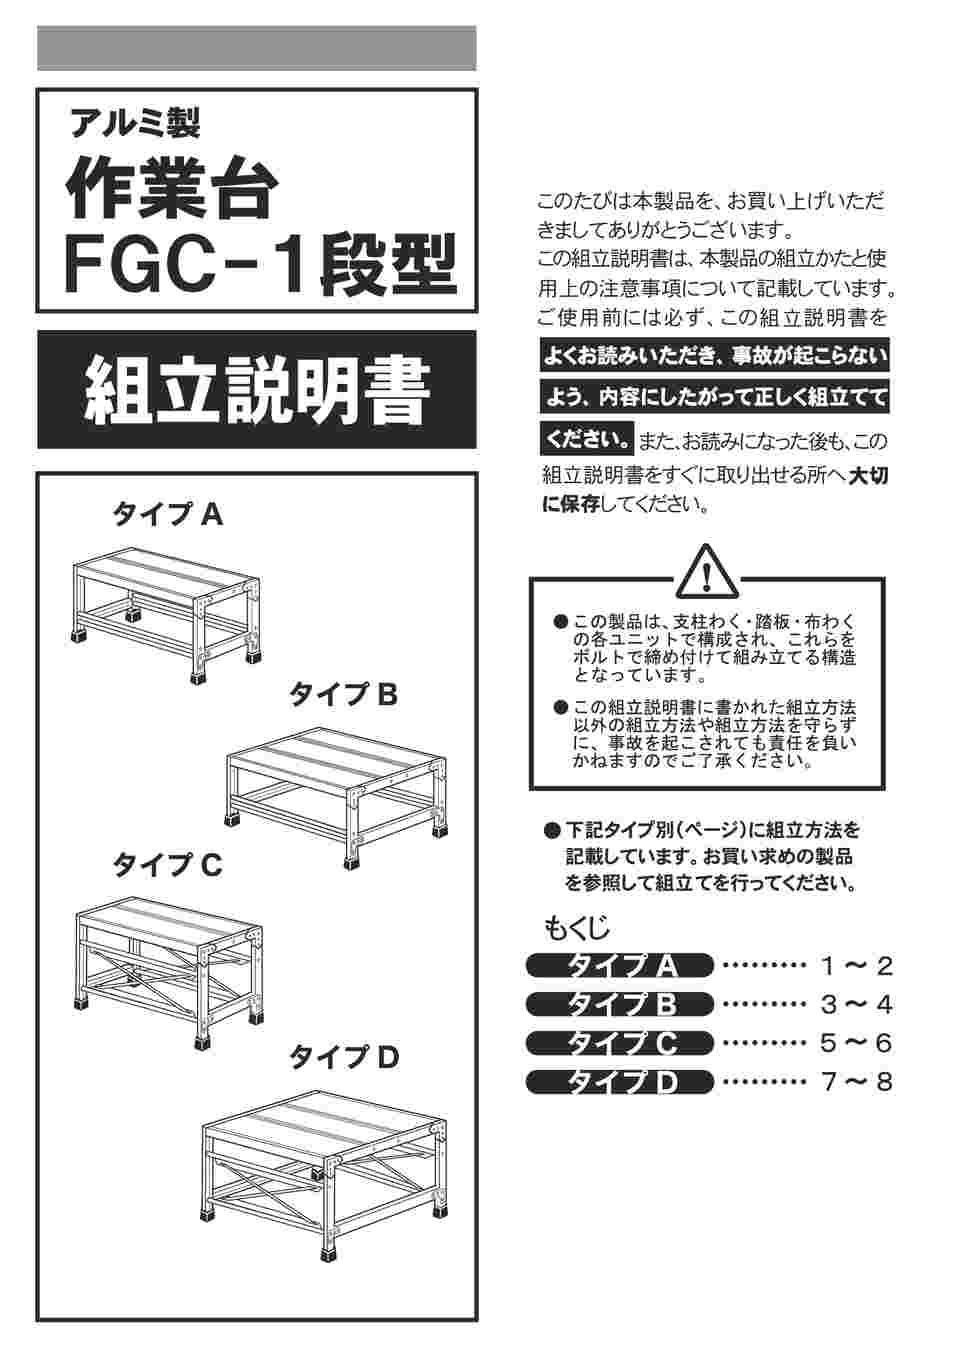 PiCa (ピカ) 作業台 FGC-1830 (FGC型1段) :pika-fgc-1830:工具屋さん